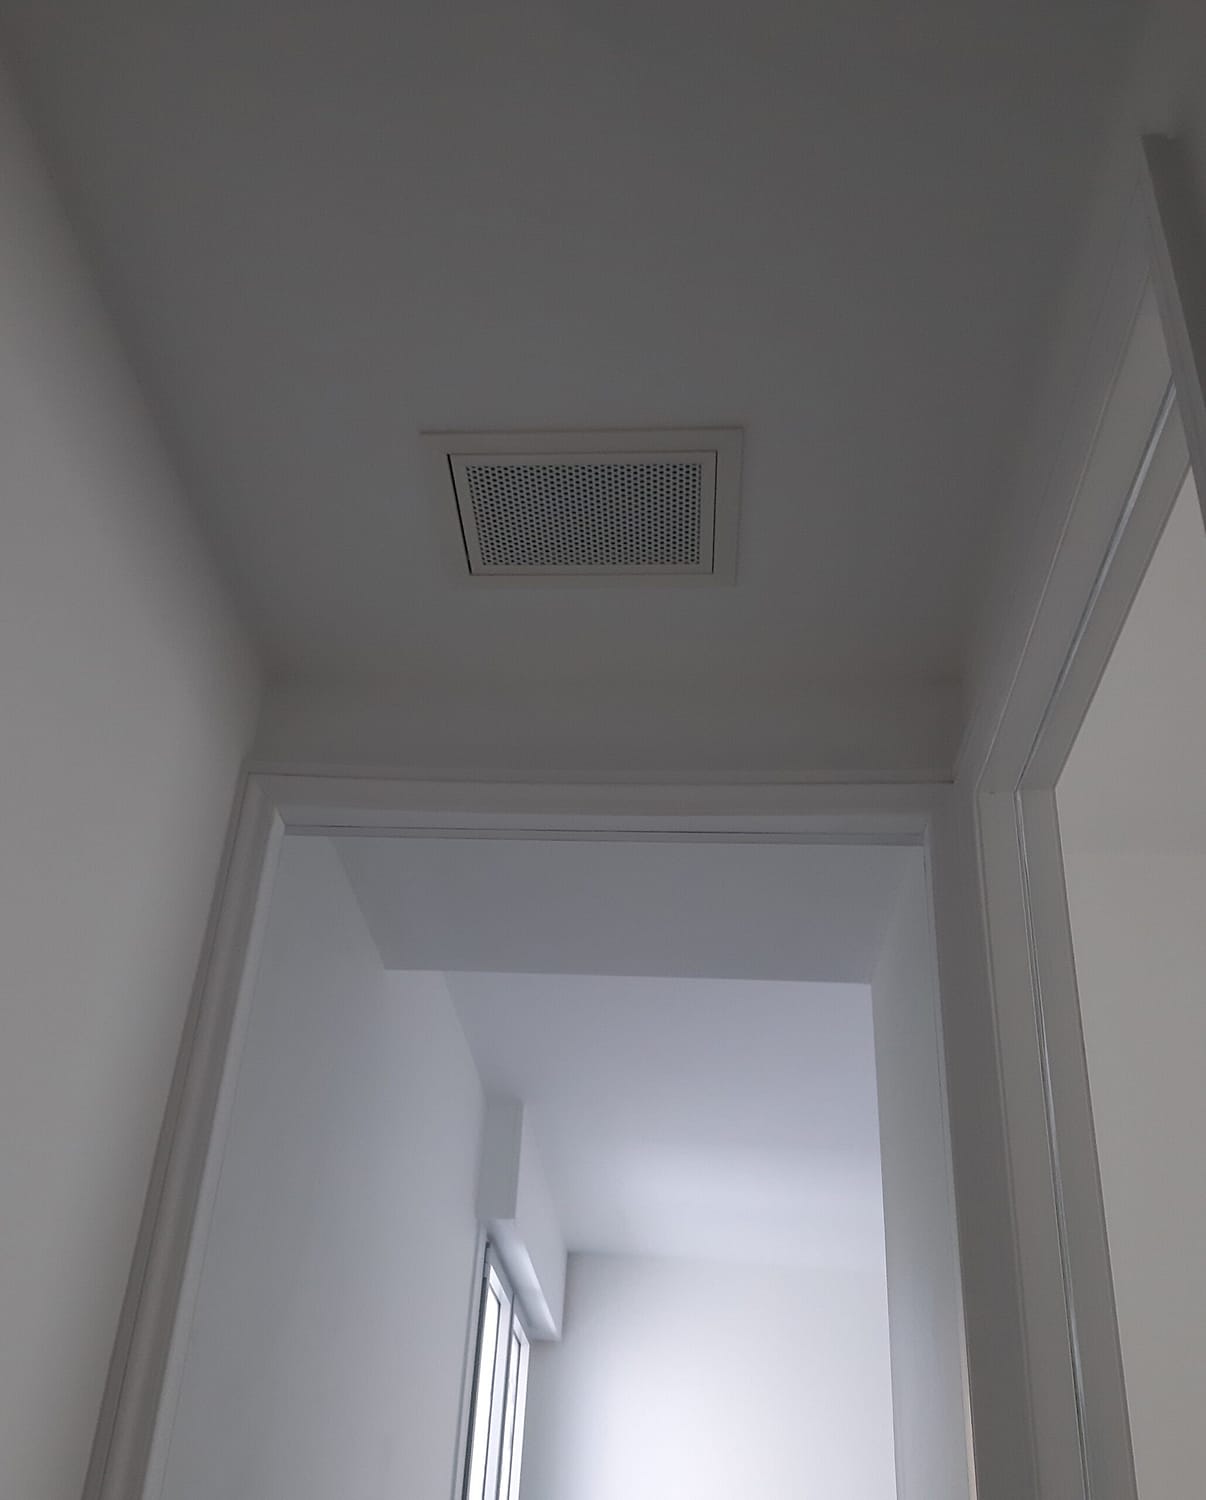 Sortie plafond ventilation propre